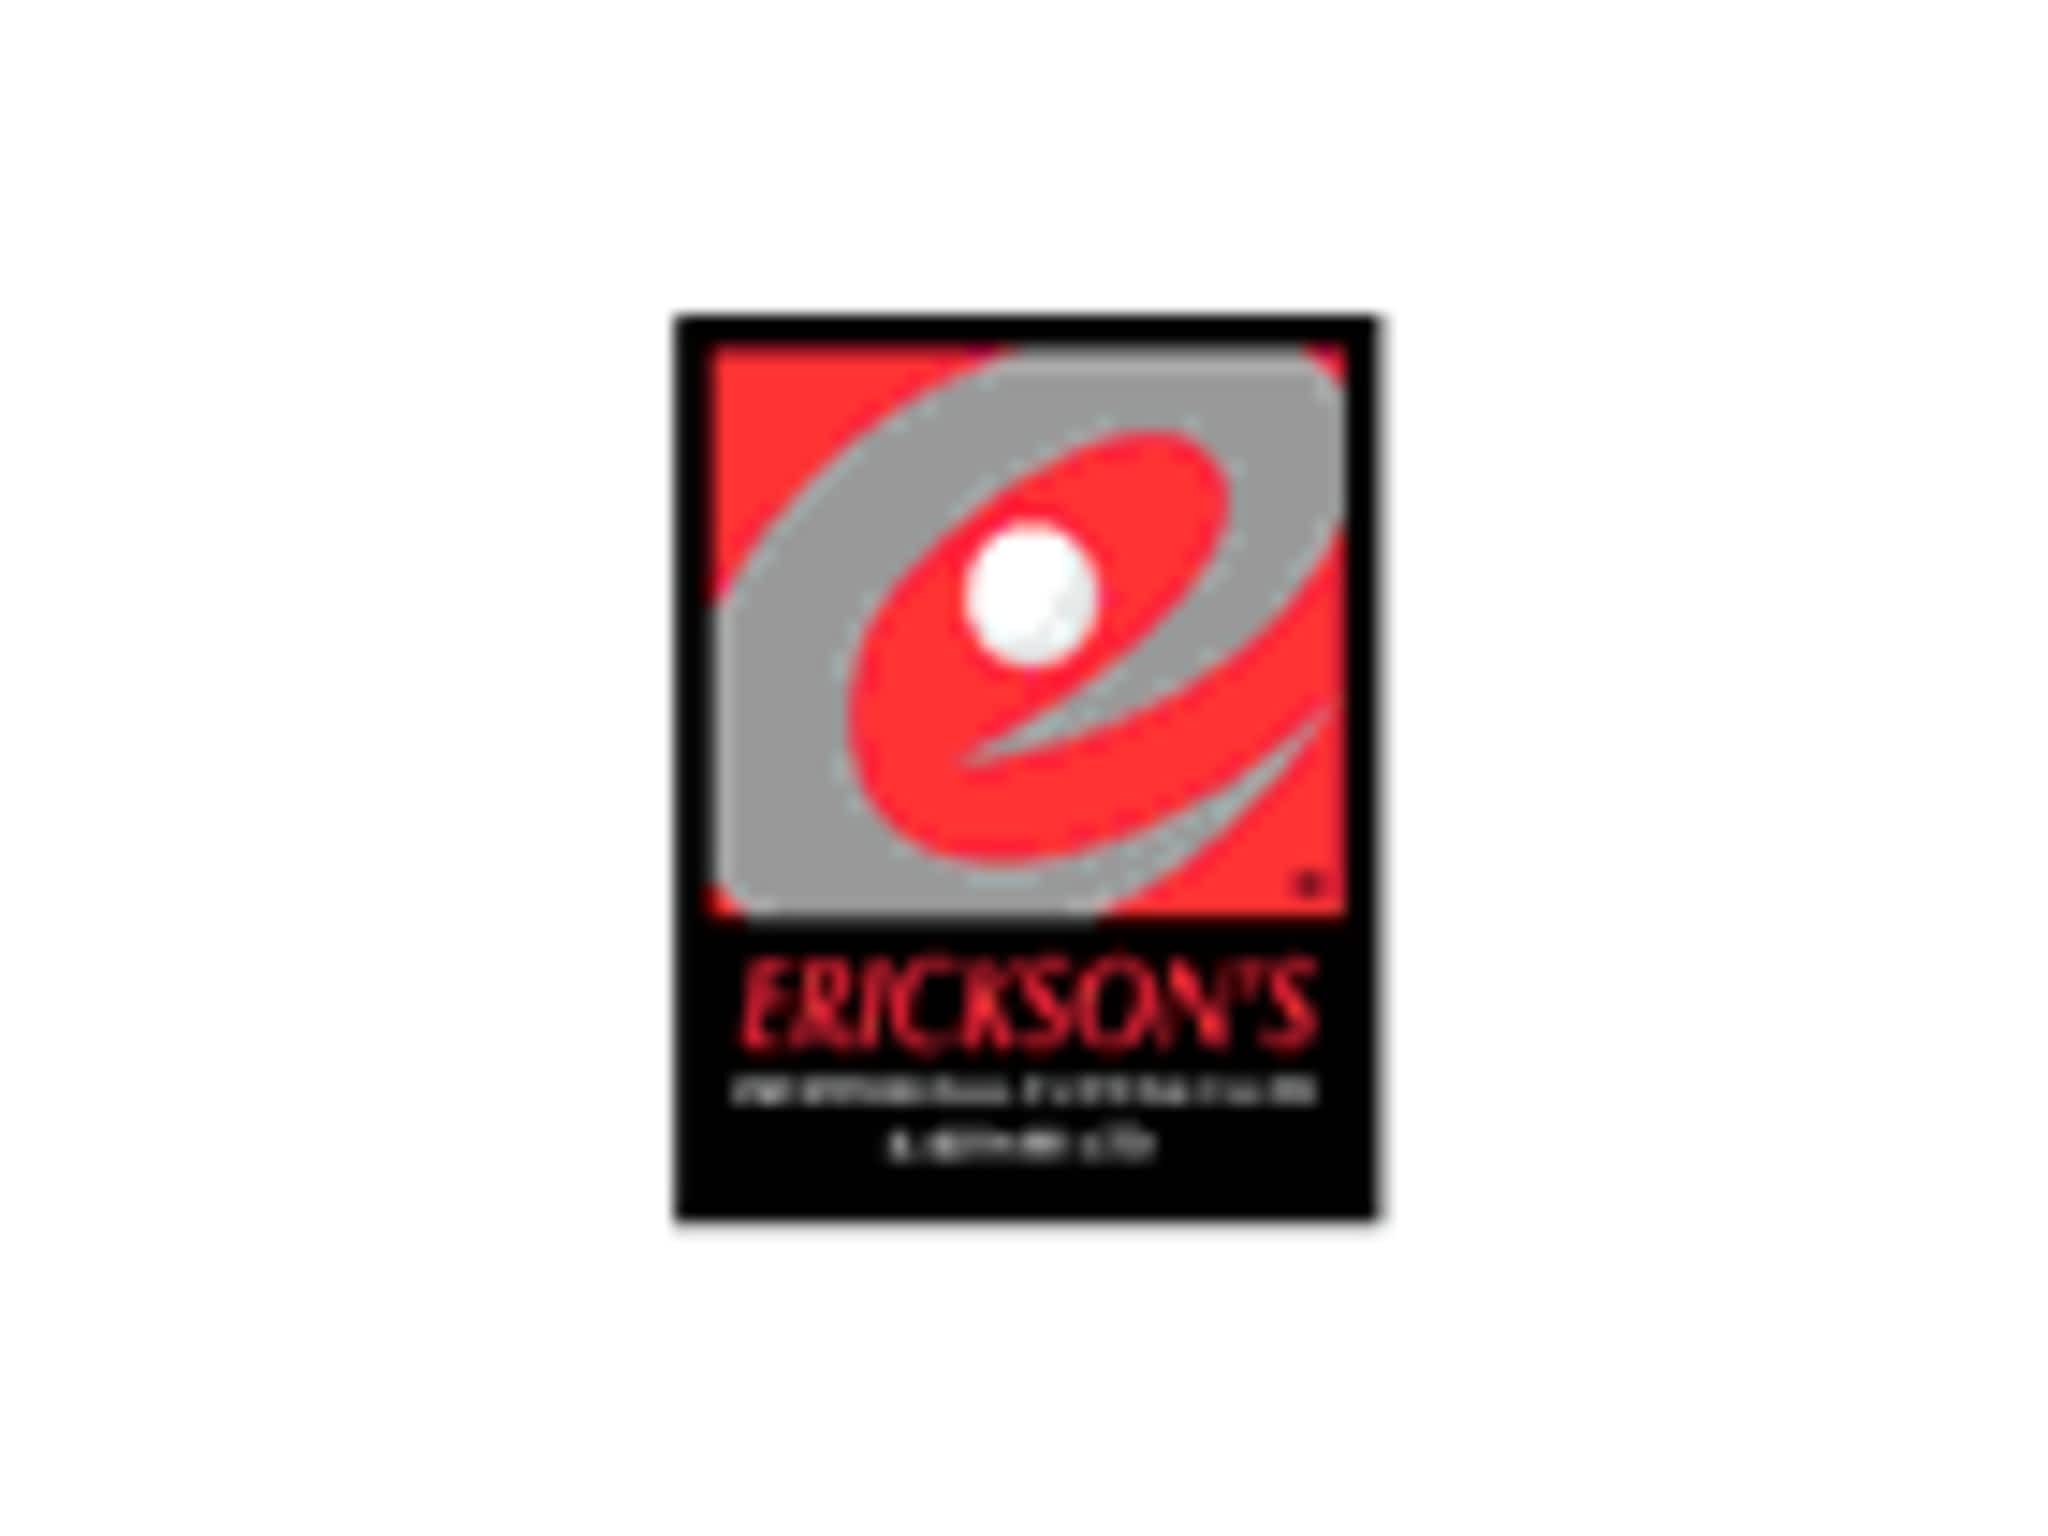 photo Erickson's Professional Custom Clubs & Repairs Ltd